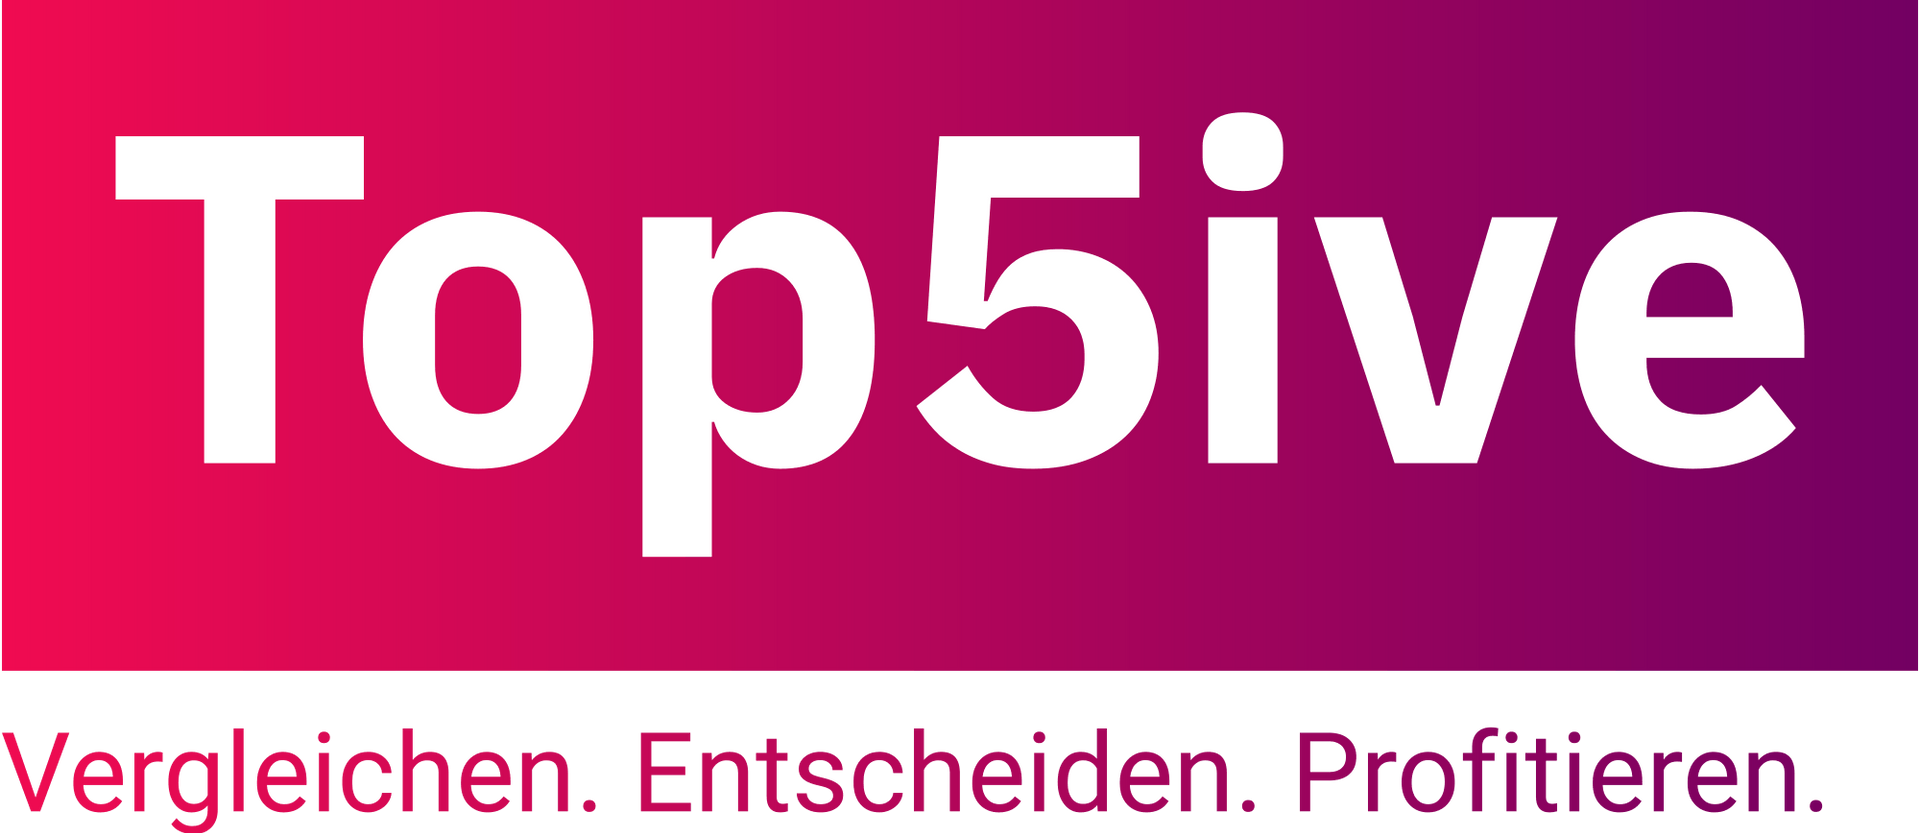 Top5ive Logo